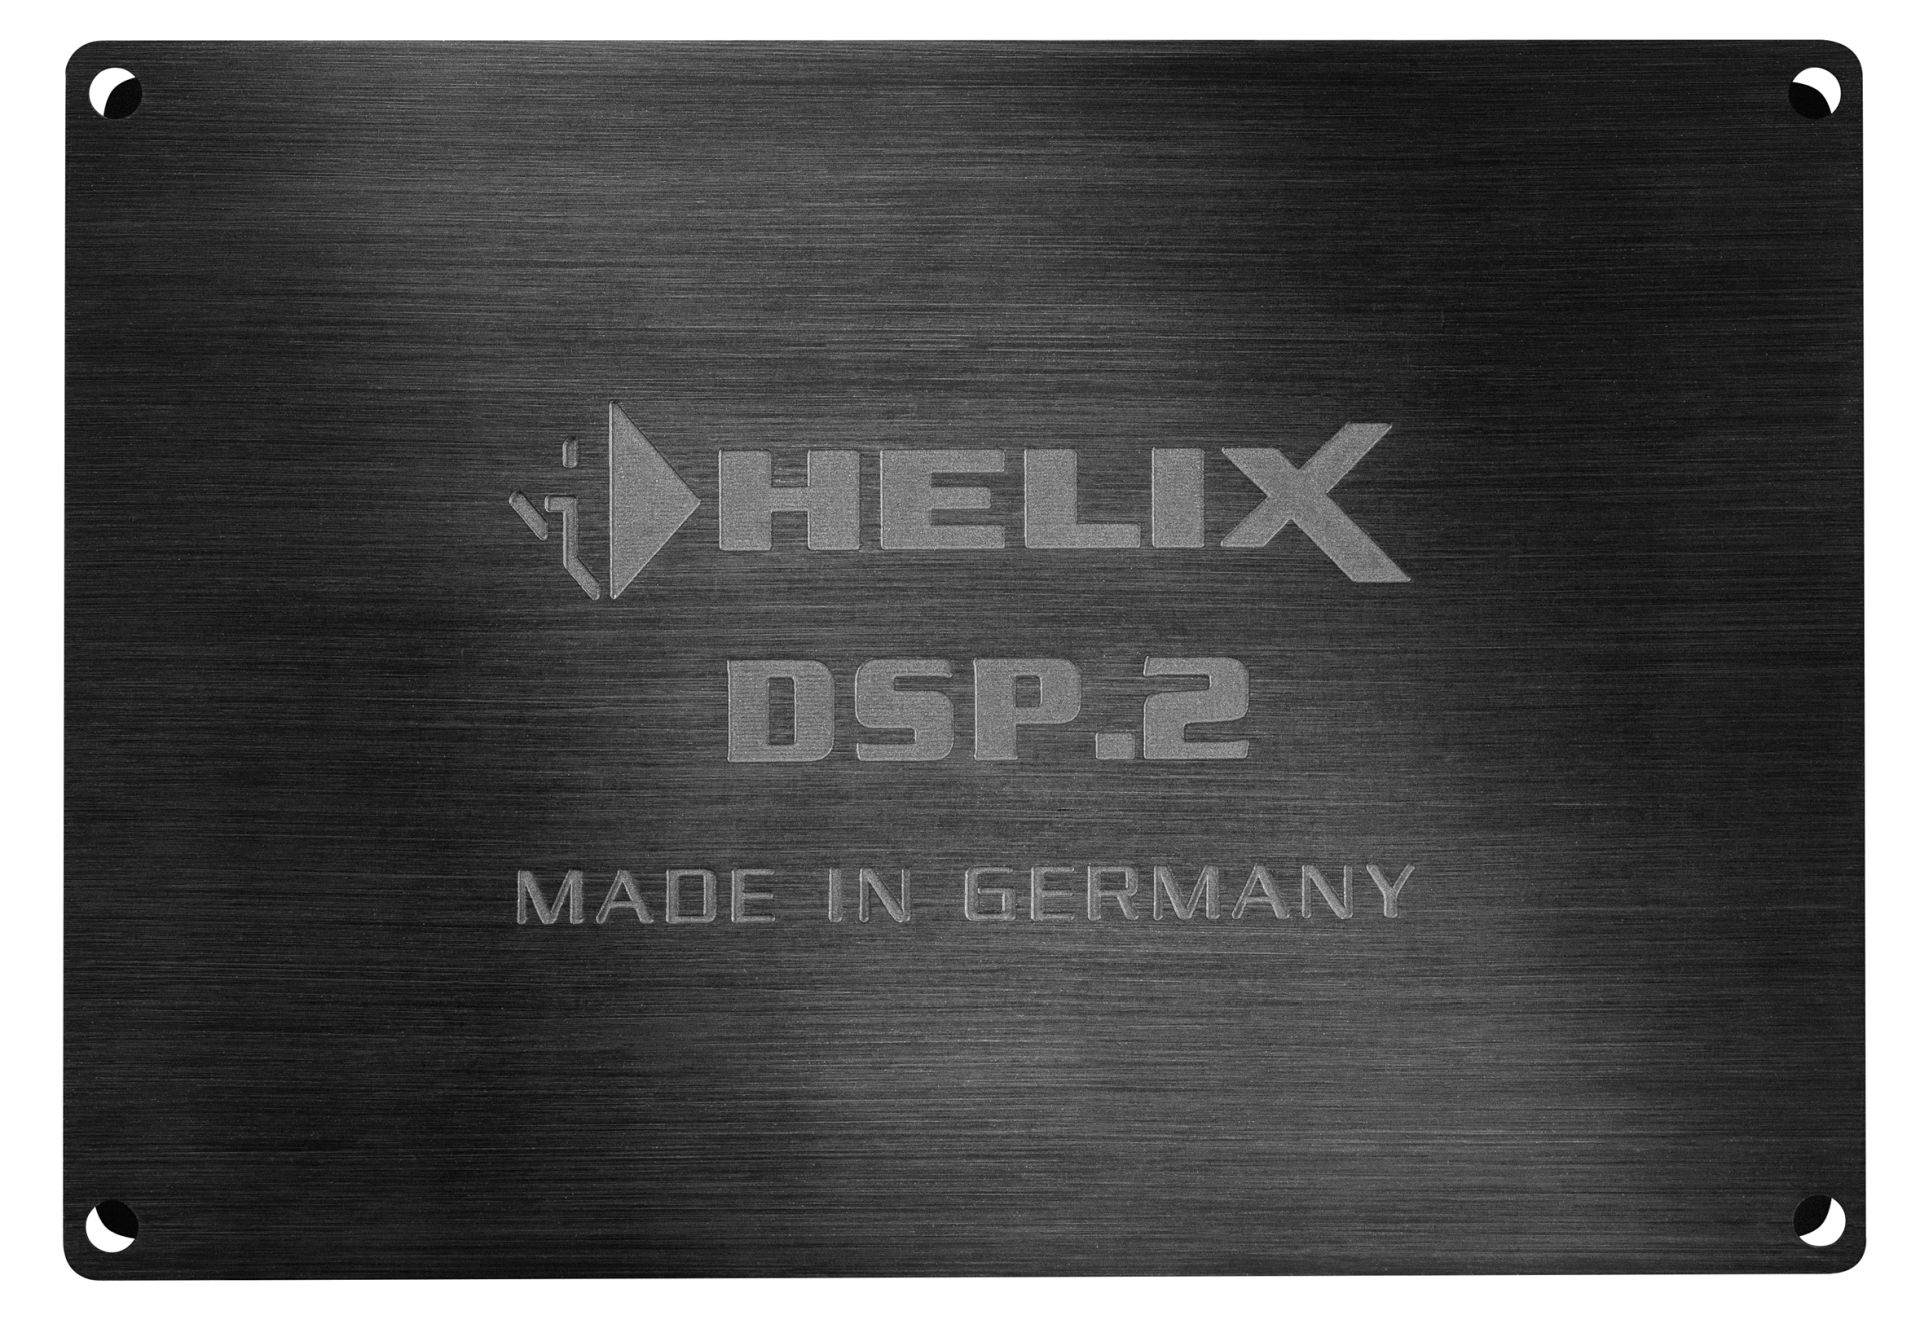 Zvočni procesor Helix DSP.2